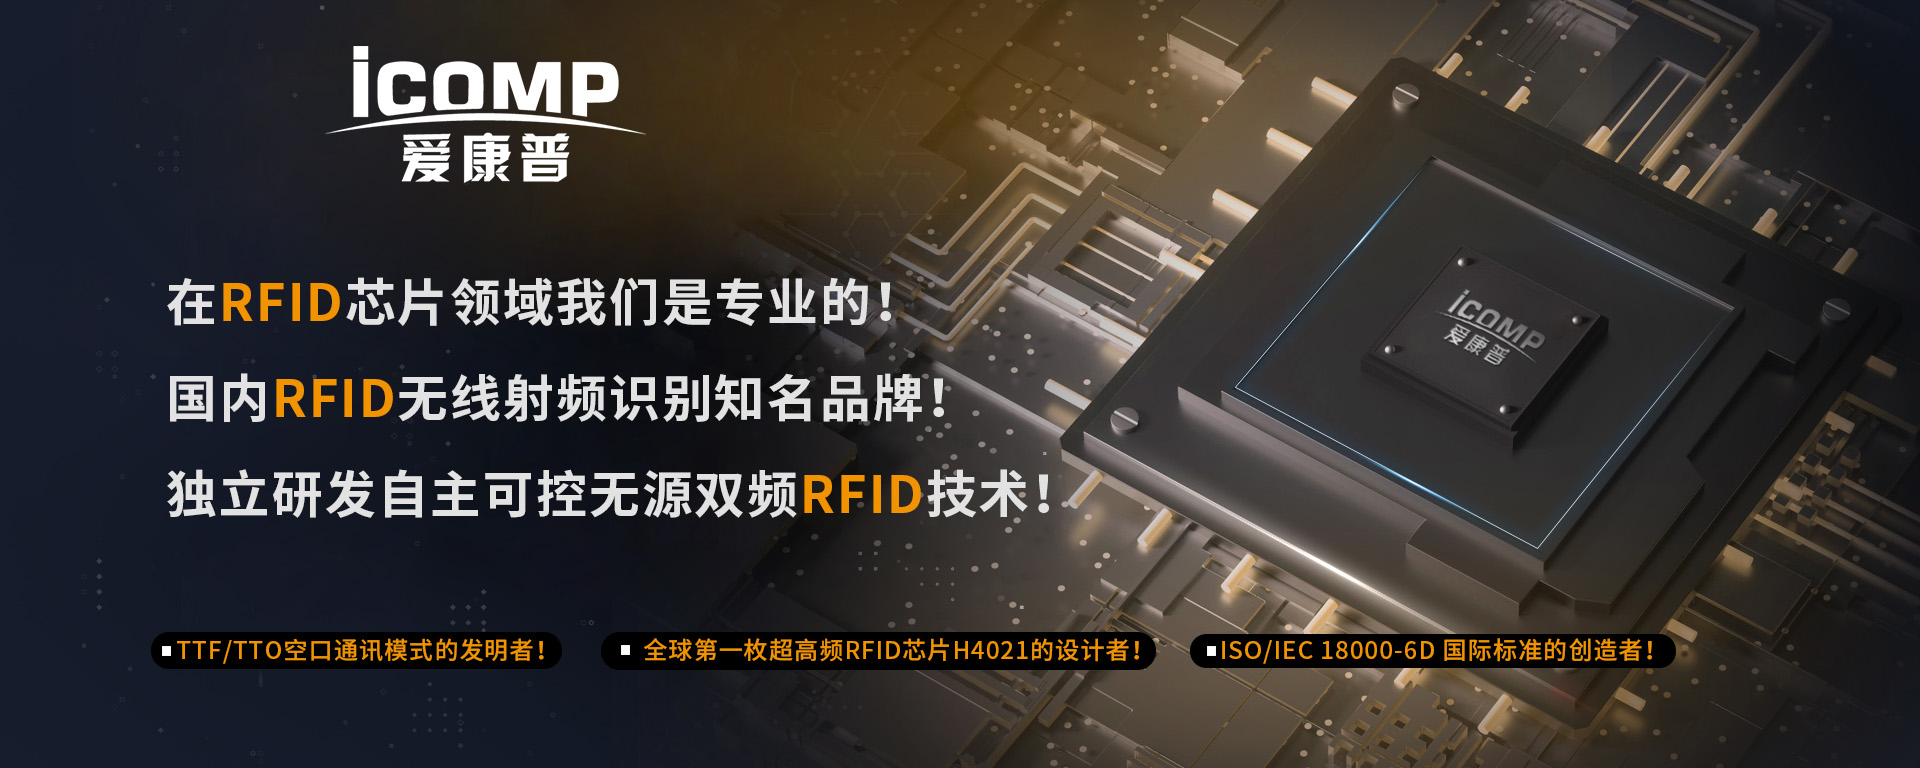 ICOMP RFID芯片